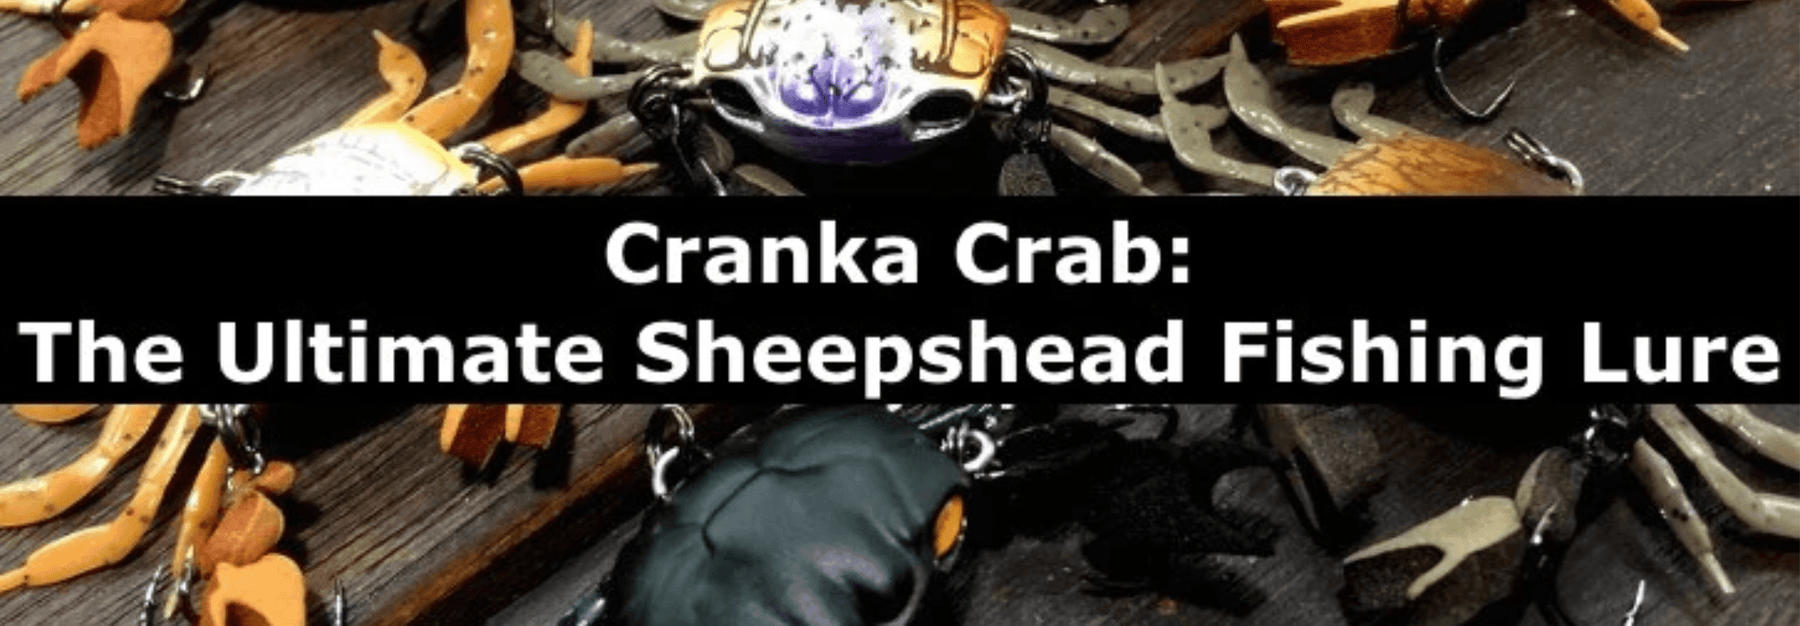 Cranka Crab - The Ultimate Sheepshead Fishing Lure